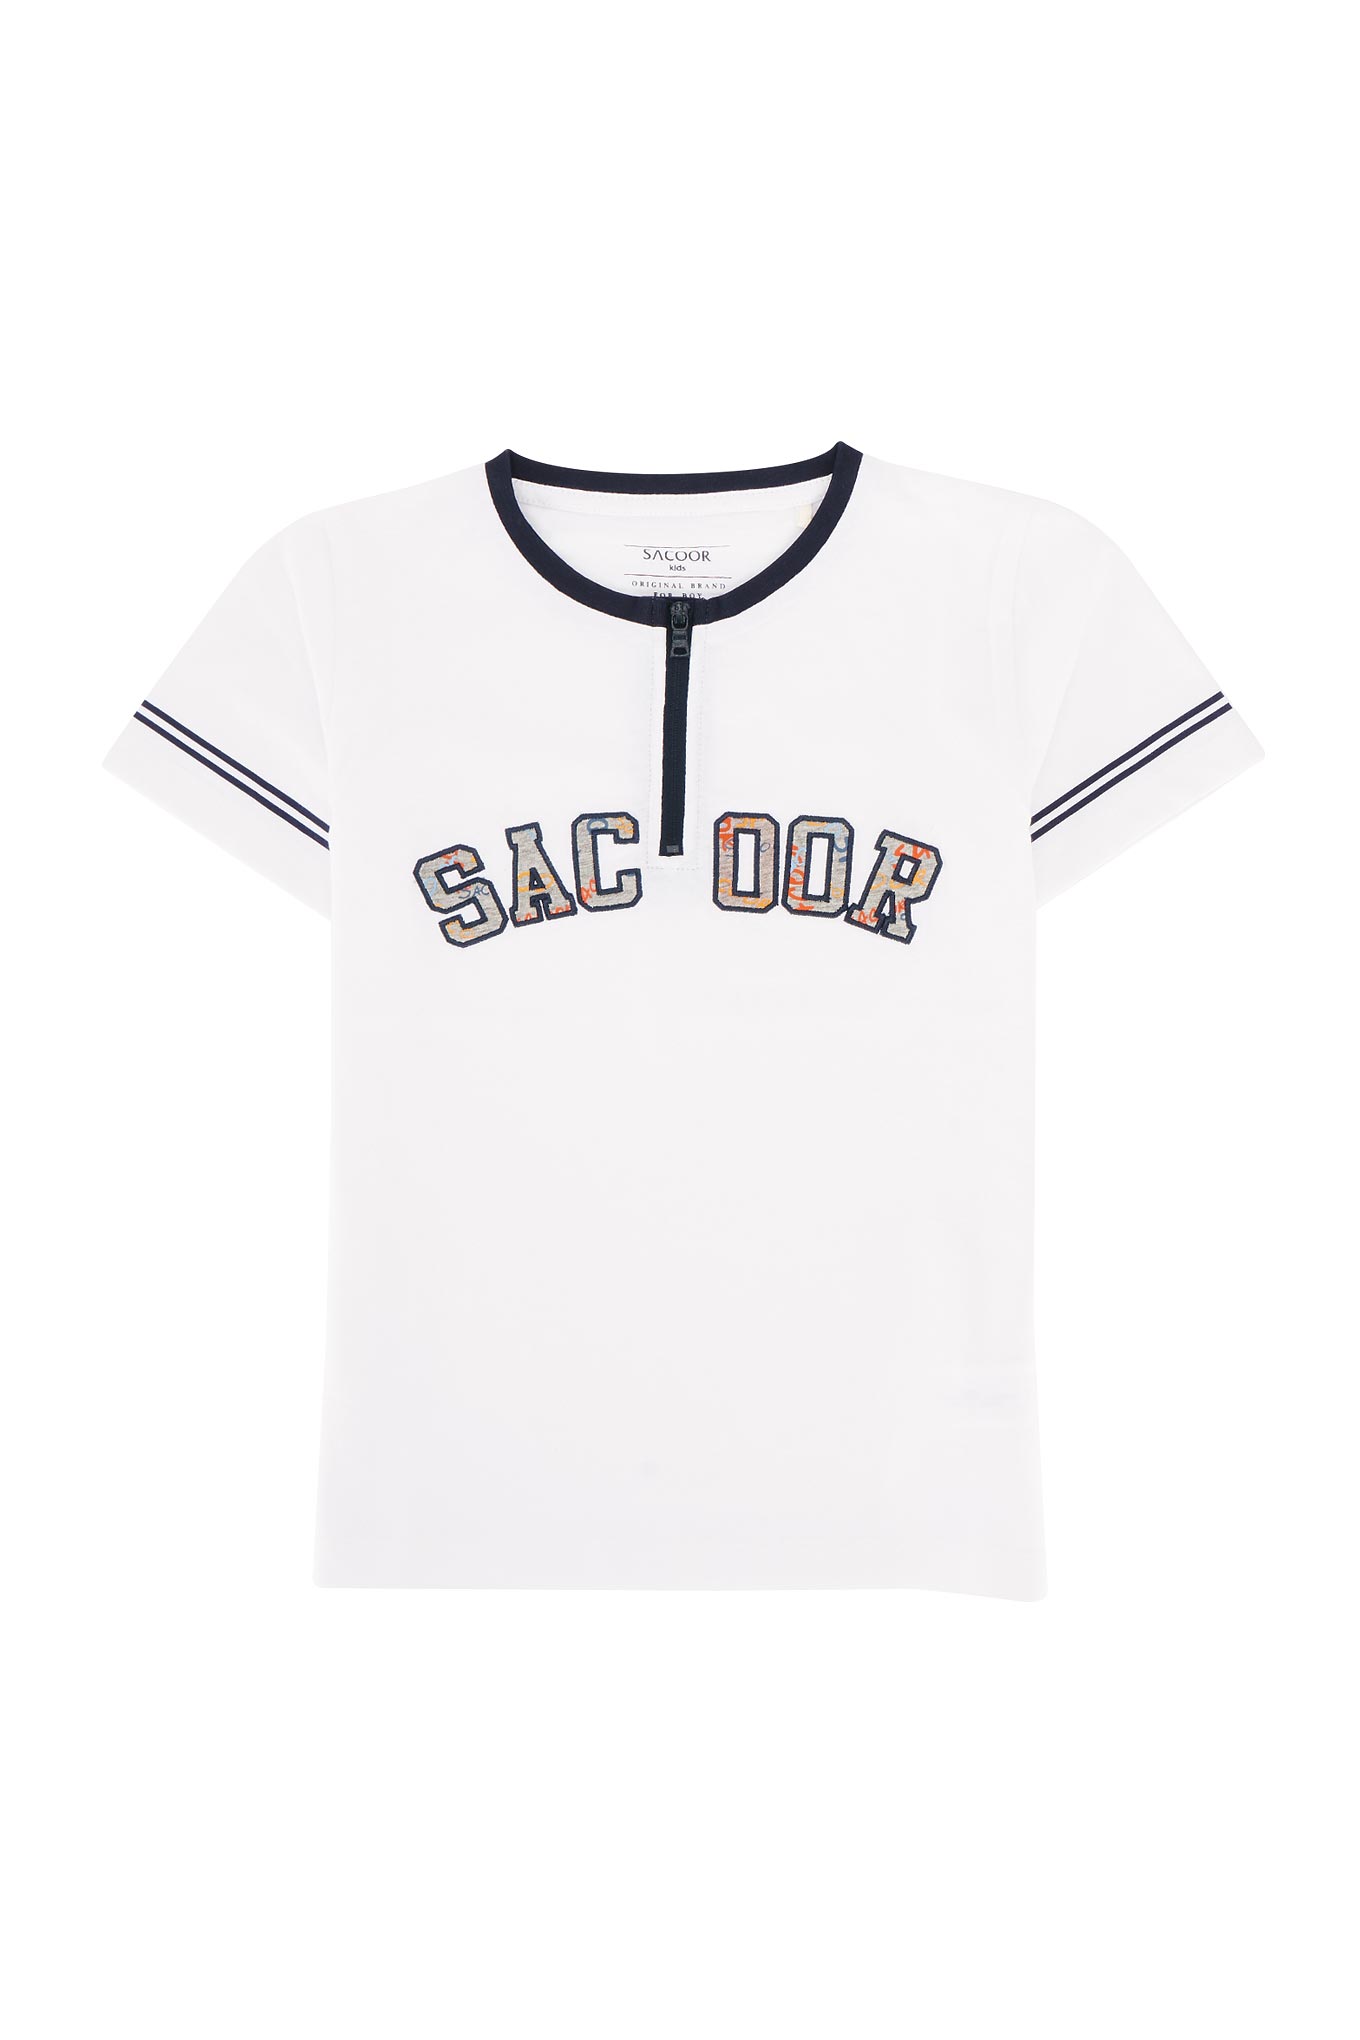 T-Shirt White Sport Boy